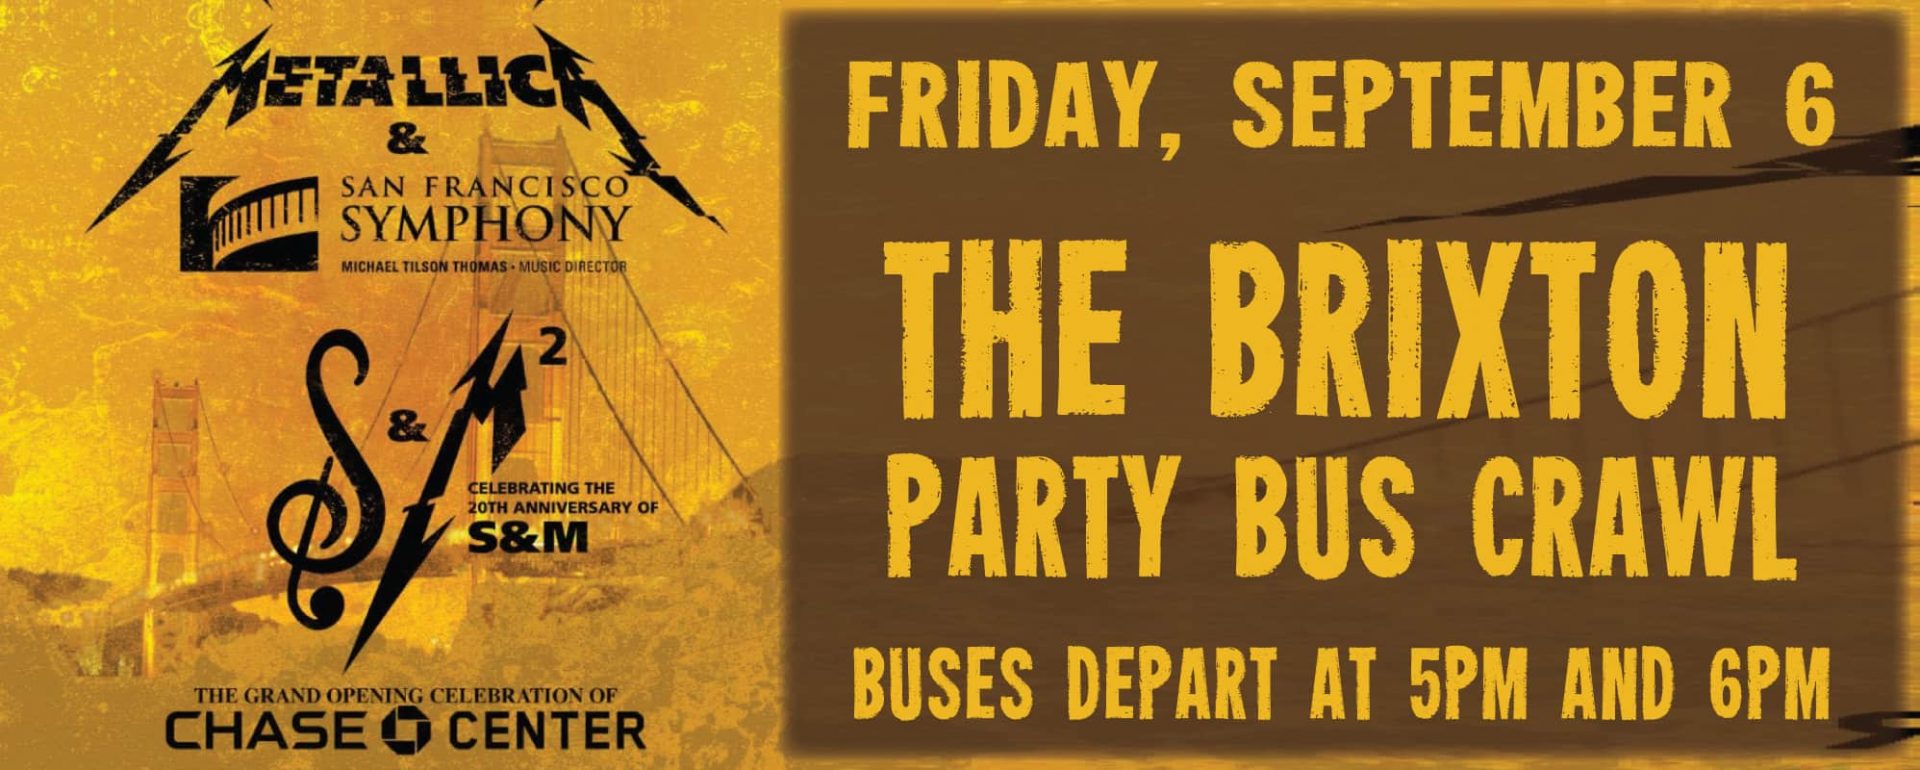 The Brixton Party Bus Crawl